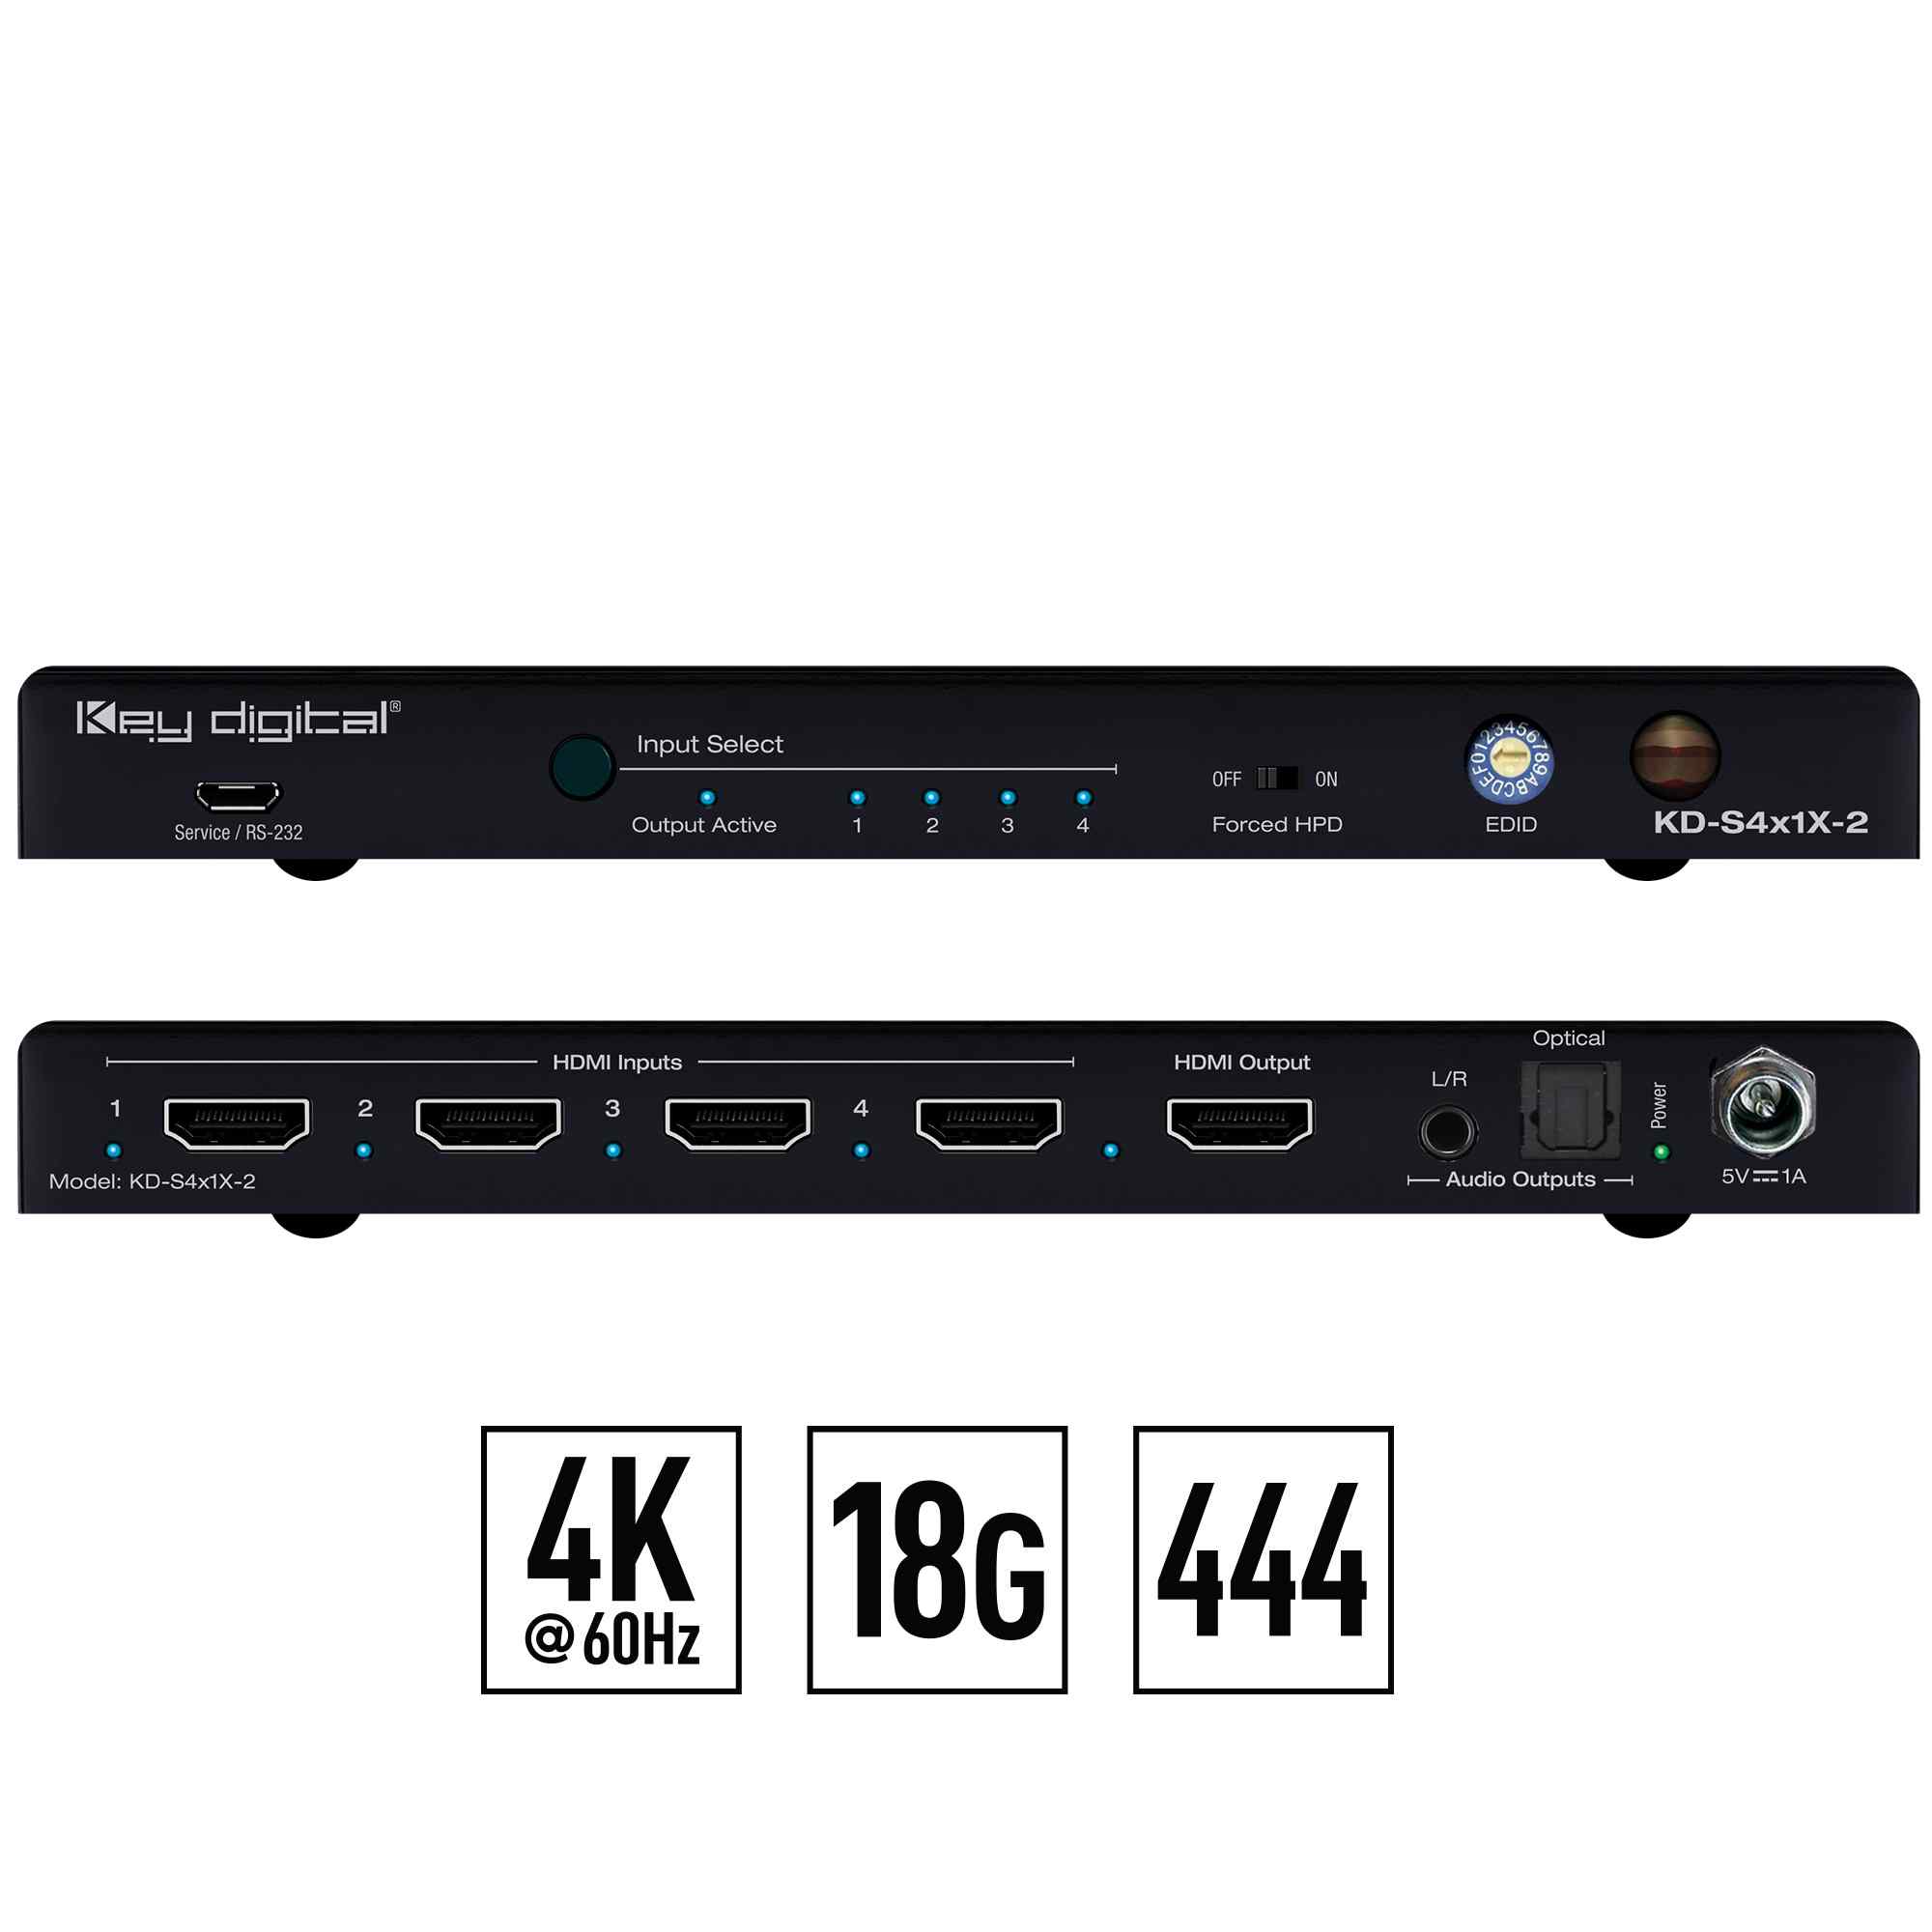 Key Digital 4x1 4K/18G HDMI Switcher with De-Embedded Audio Output (Optical/Balanced Audio) and IP Control  - KD-Pro4x1X-2